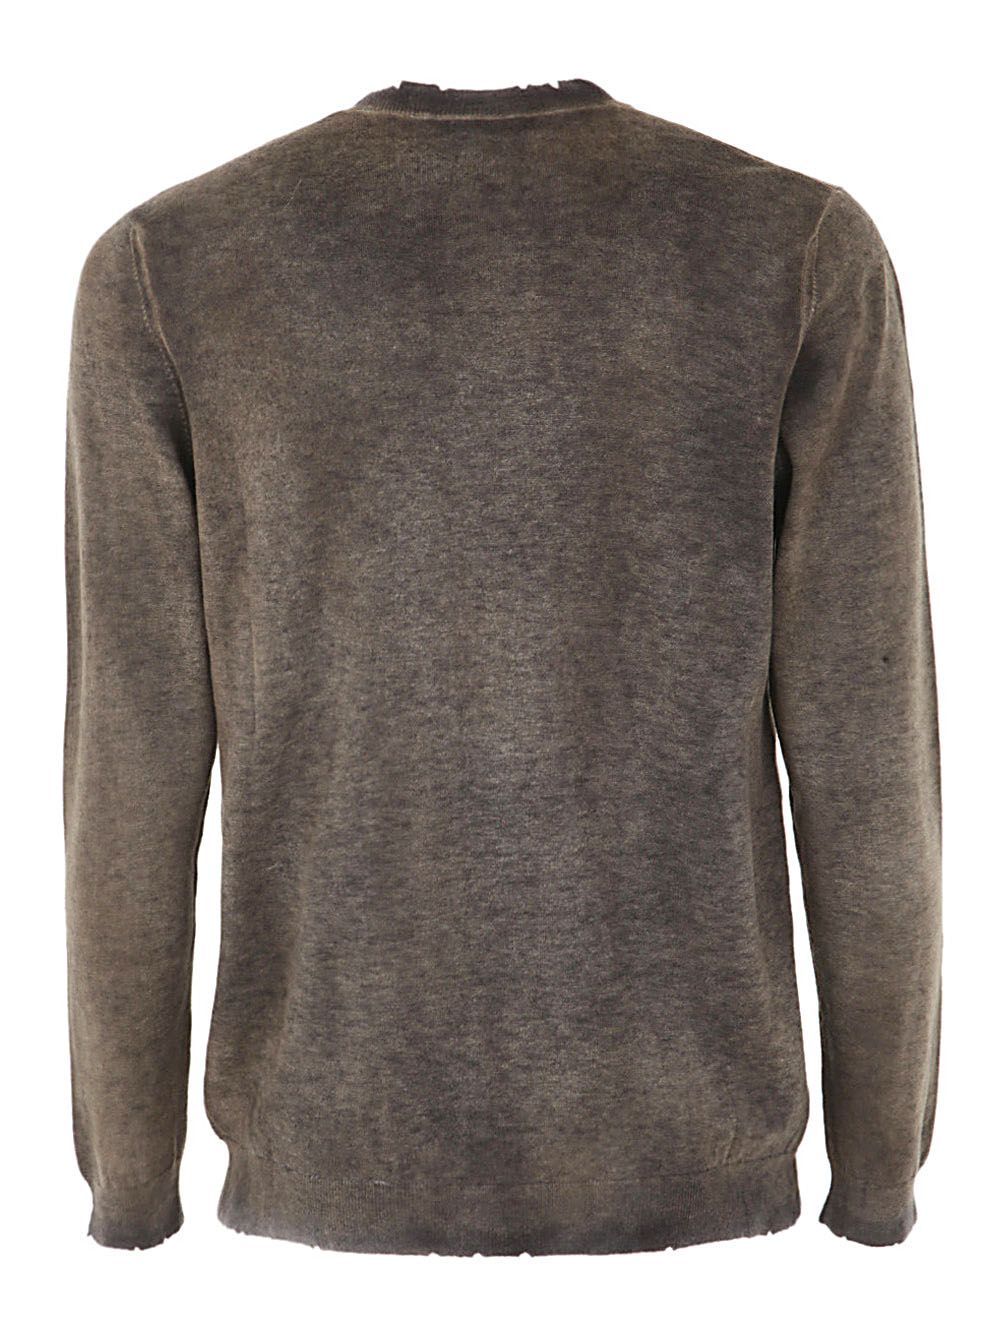 Shop Avant Toi 's Sweater With Destroyed Effect Bernardellistores. Com